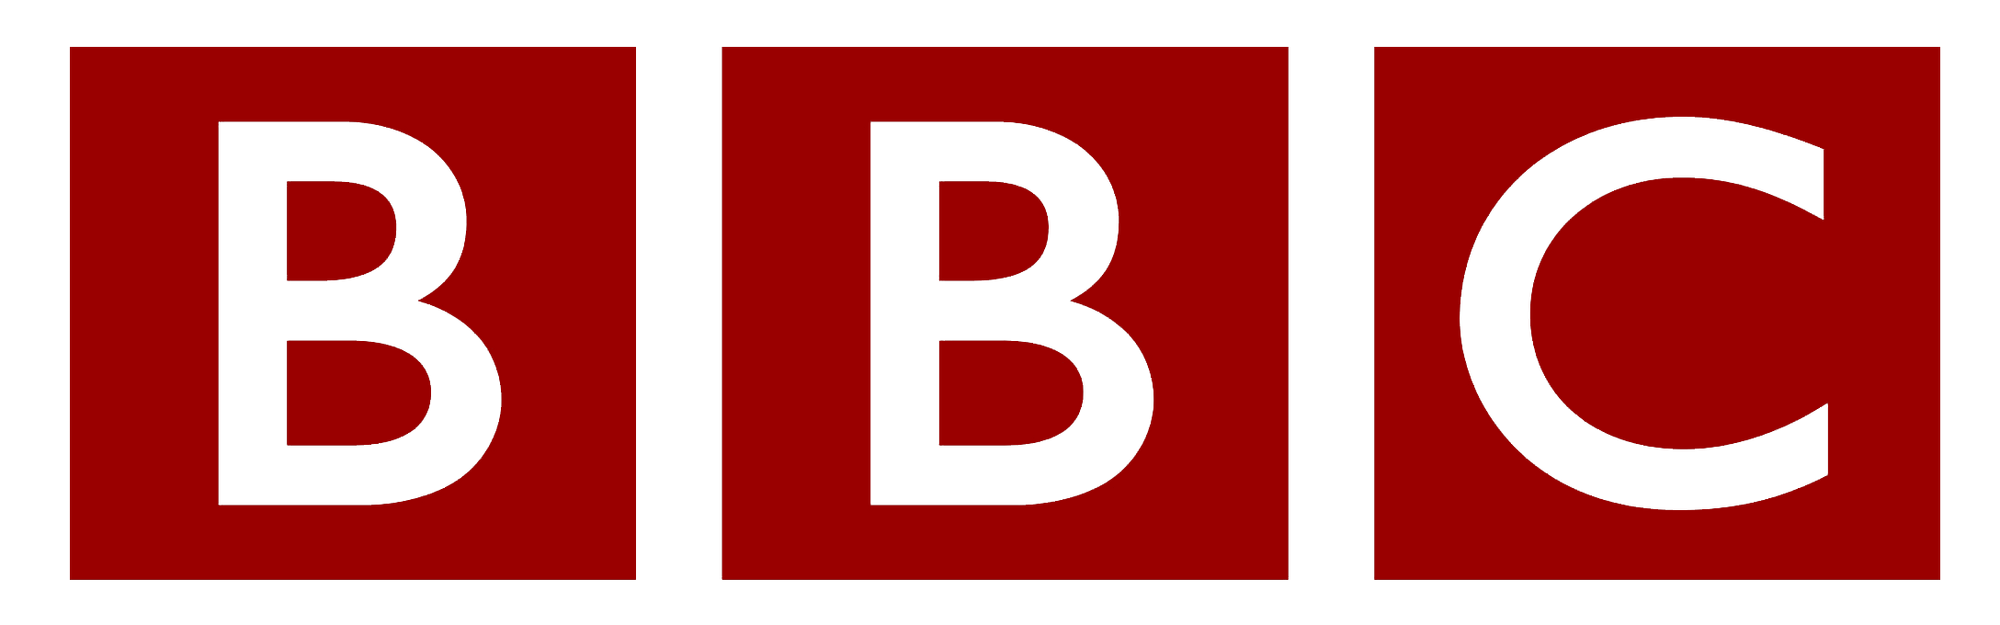 Bbc Logo PNG Pic